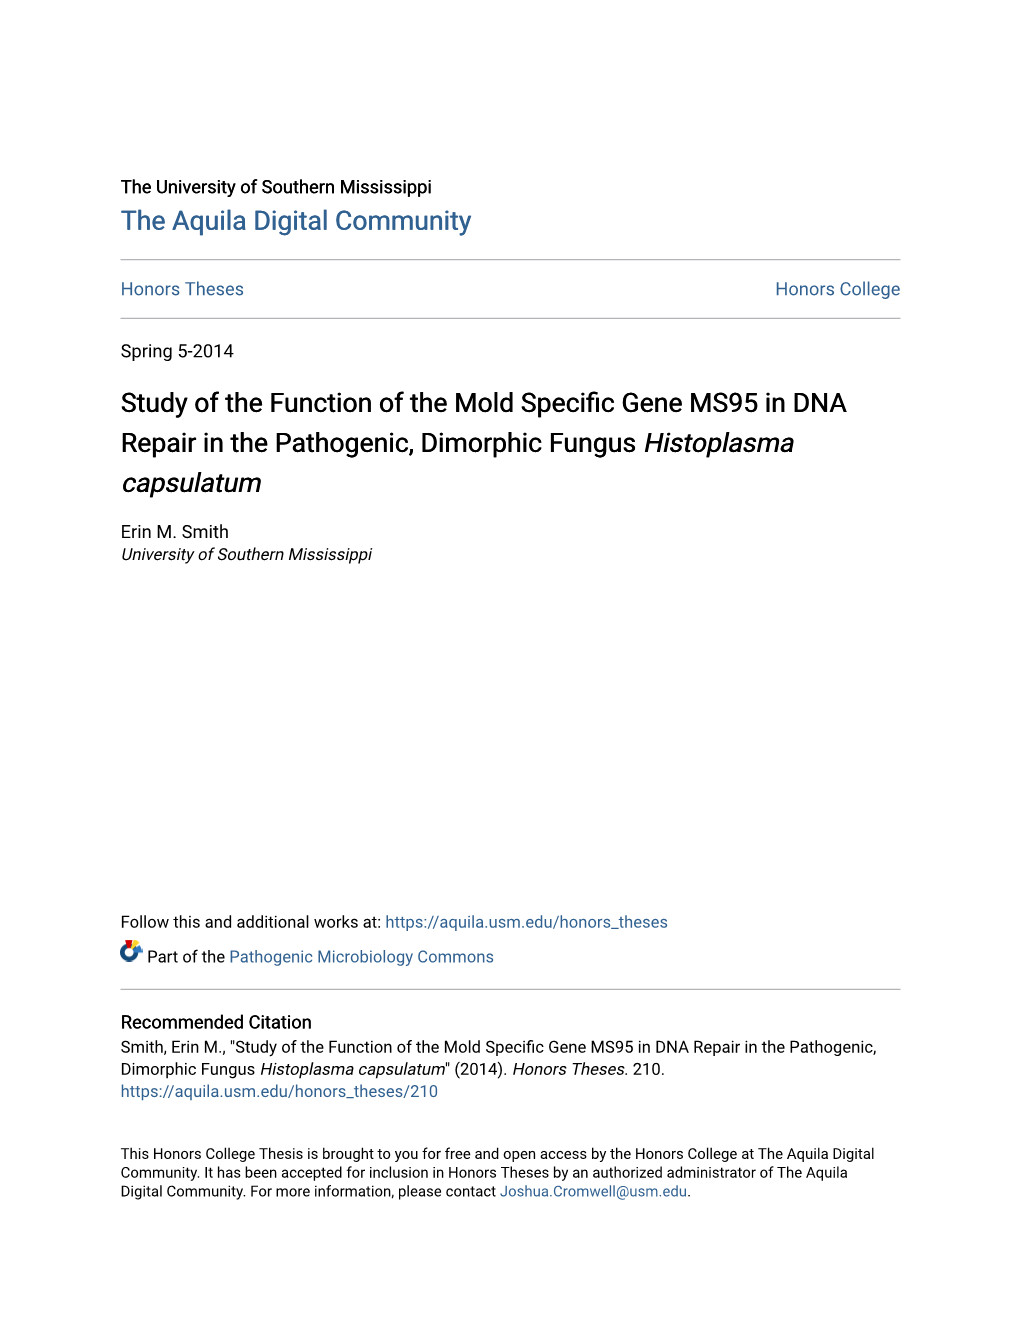 Study of the Function of the Mold Specific Gene MS95 in DNA Repair in the Pathogenic, Dimorphic Fungus Histoplasma Capsulatum